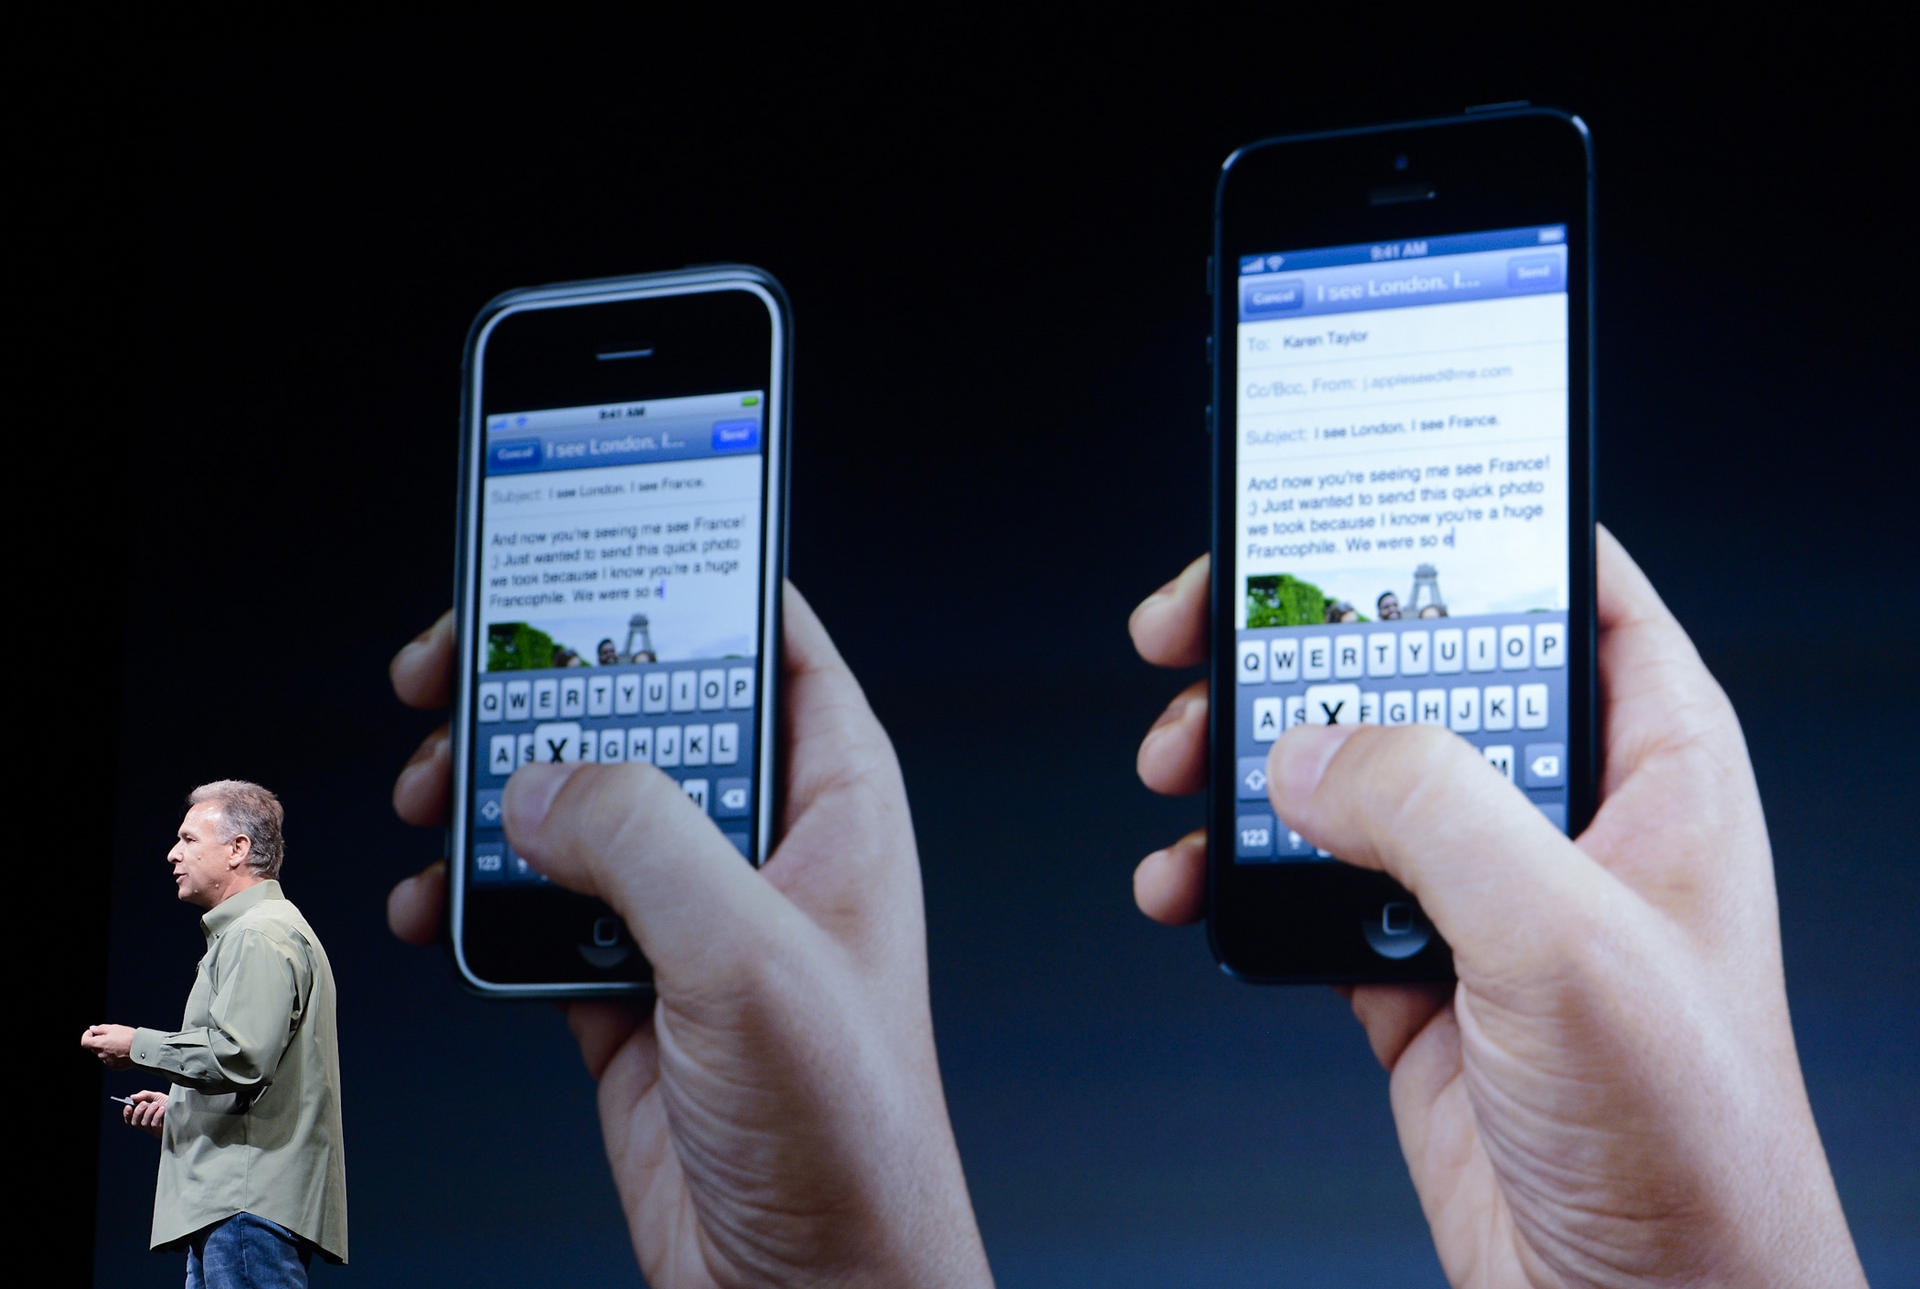 Apple's Phil Schiller announces the iPhone 5. Photo: Xinhua